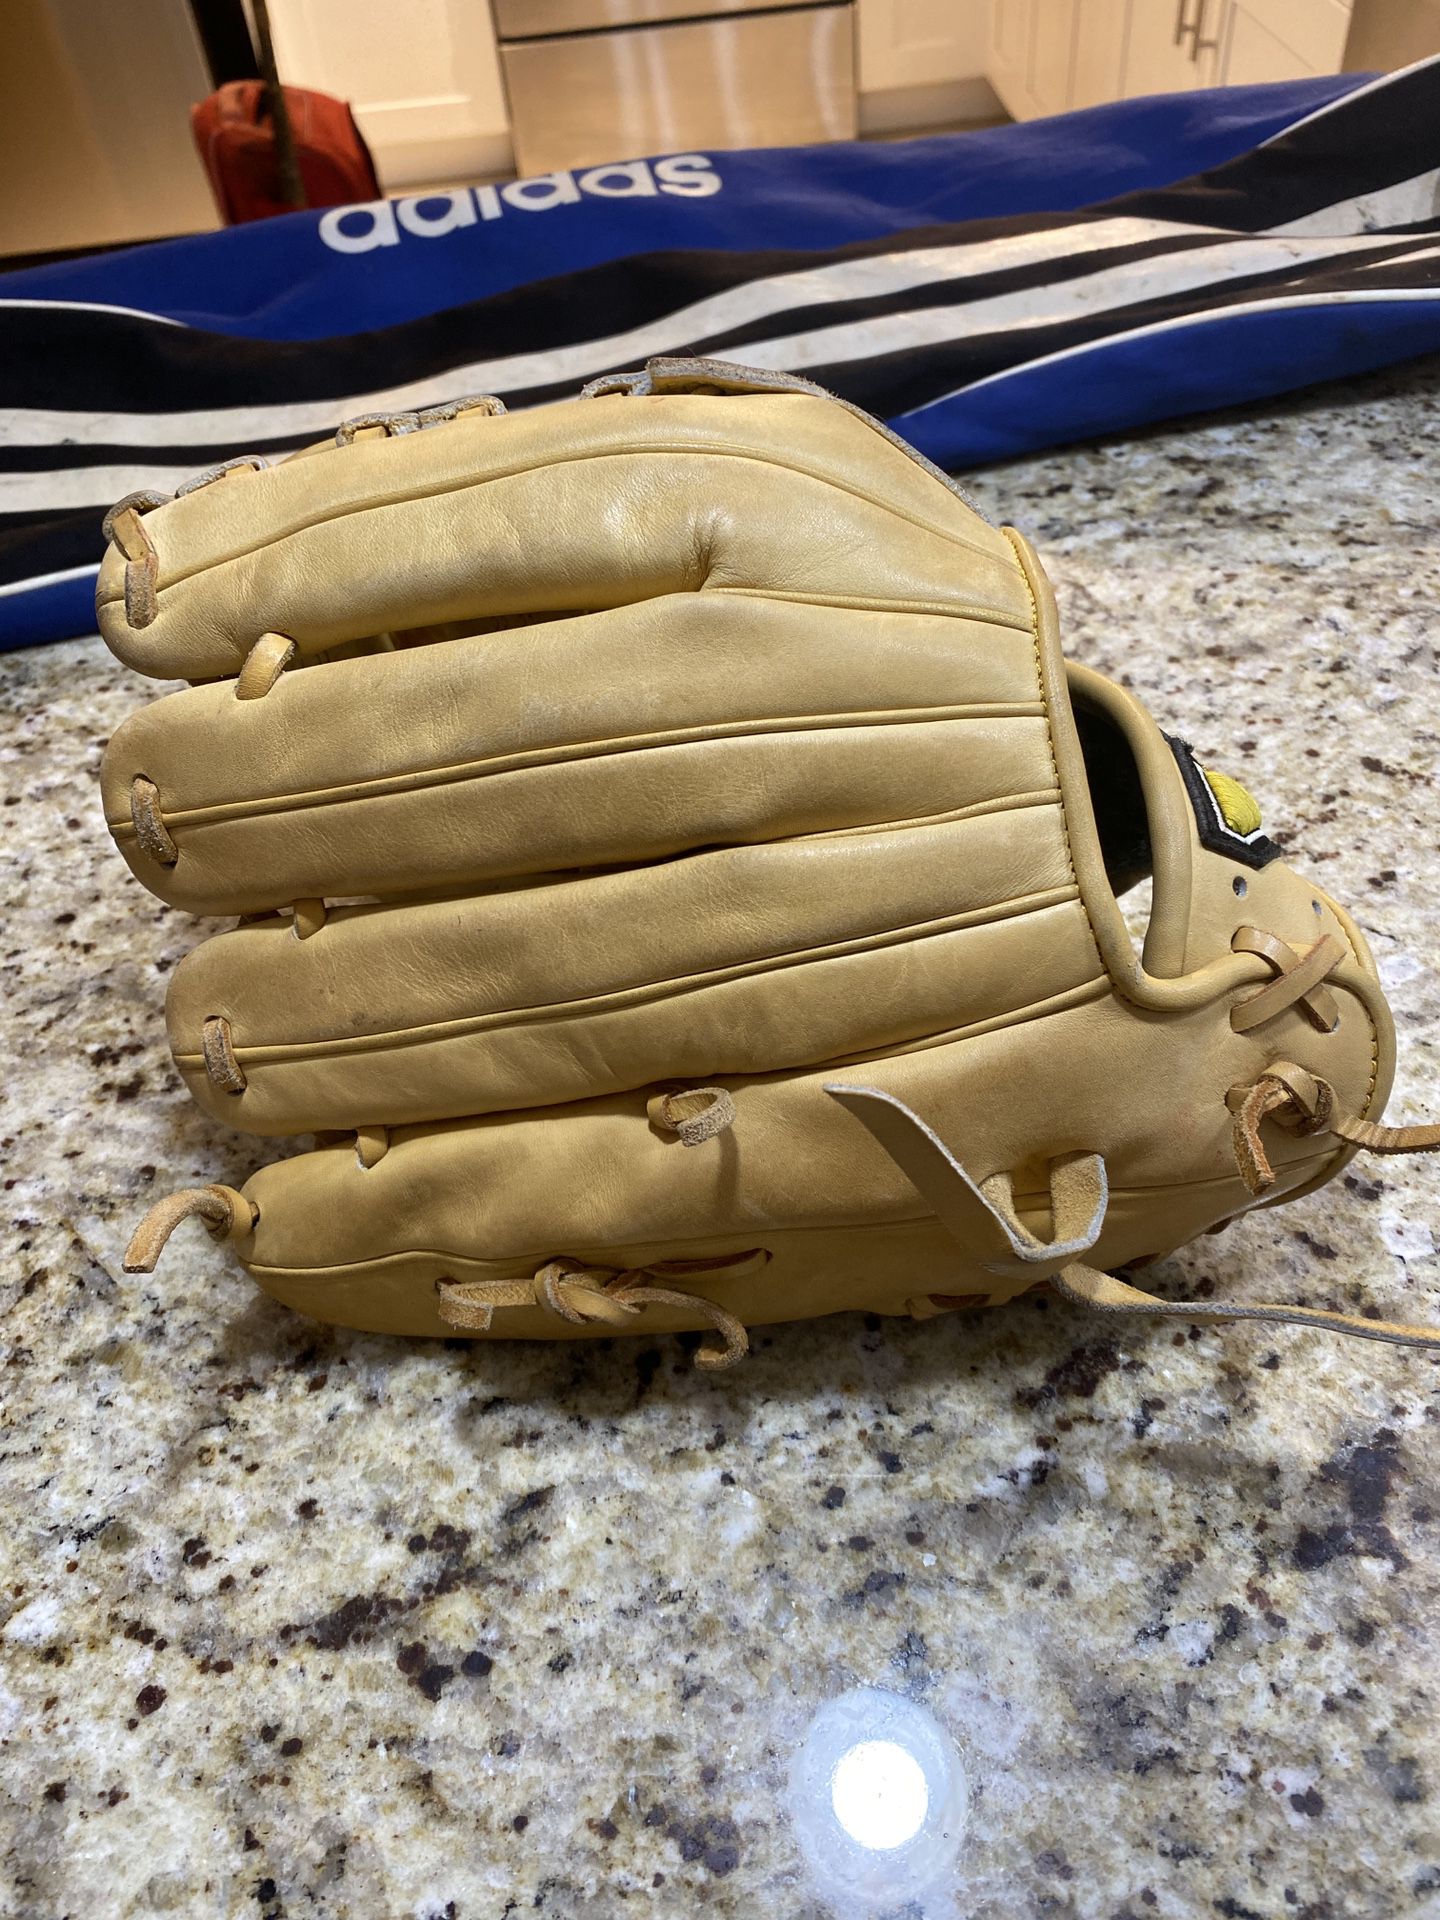 Baseball / softball glove